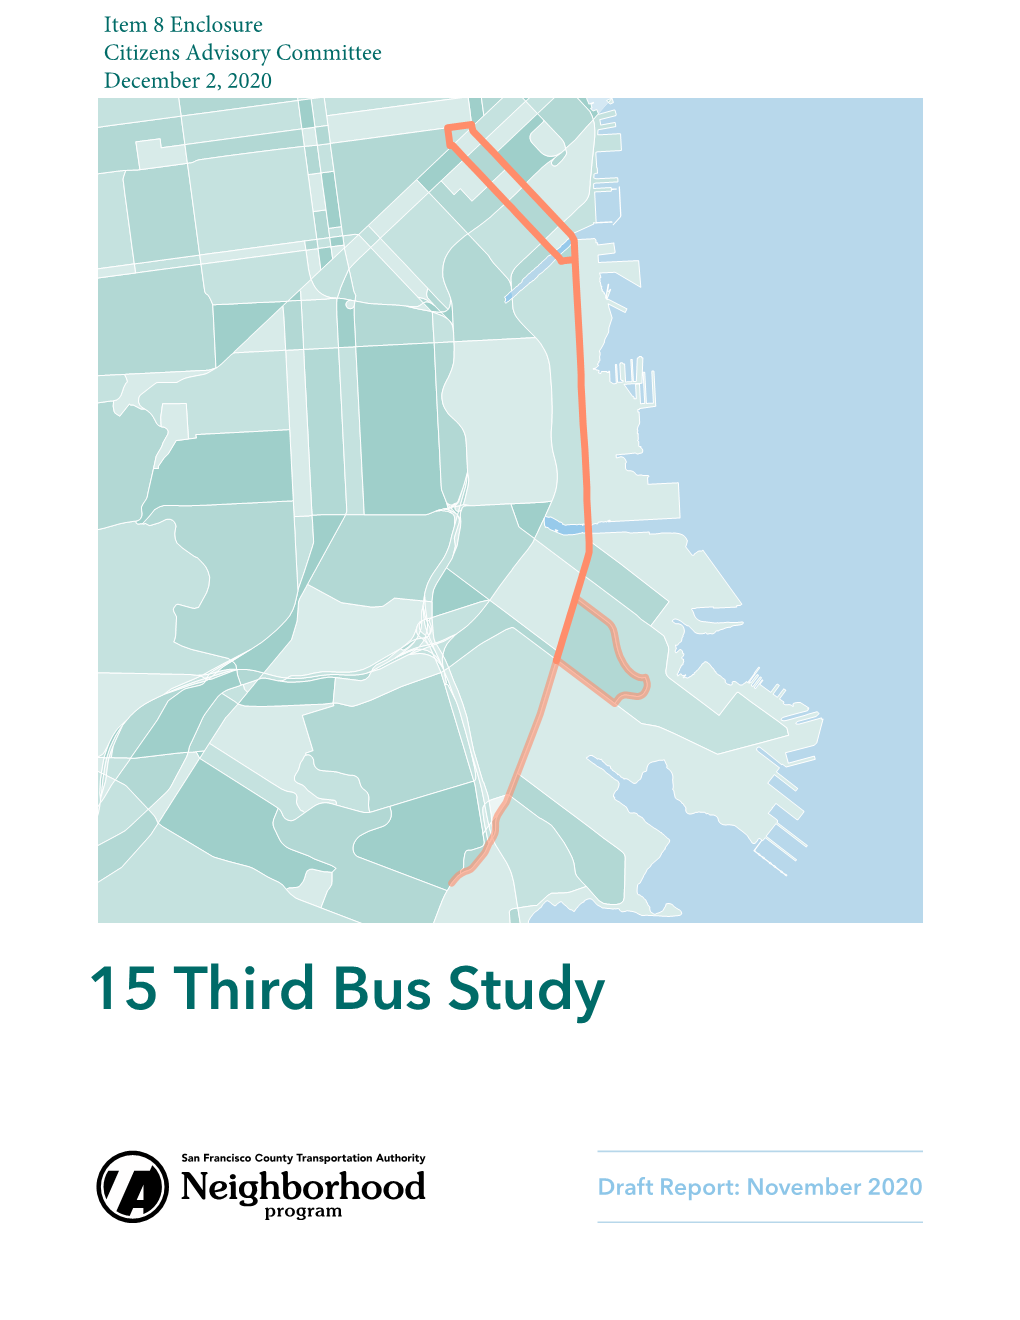 15 Third Bus Study